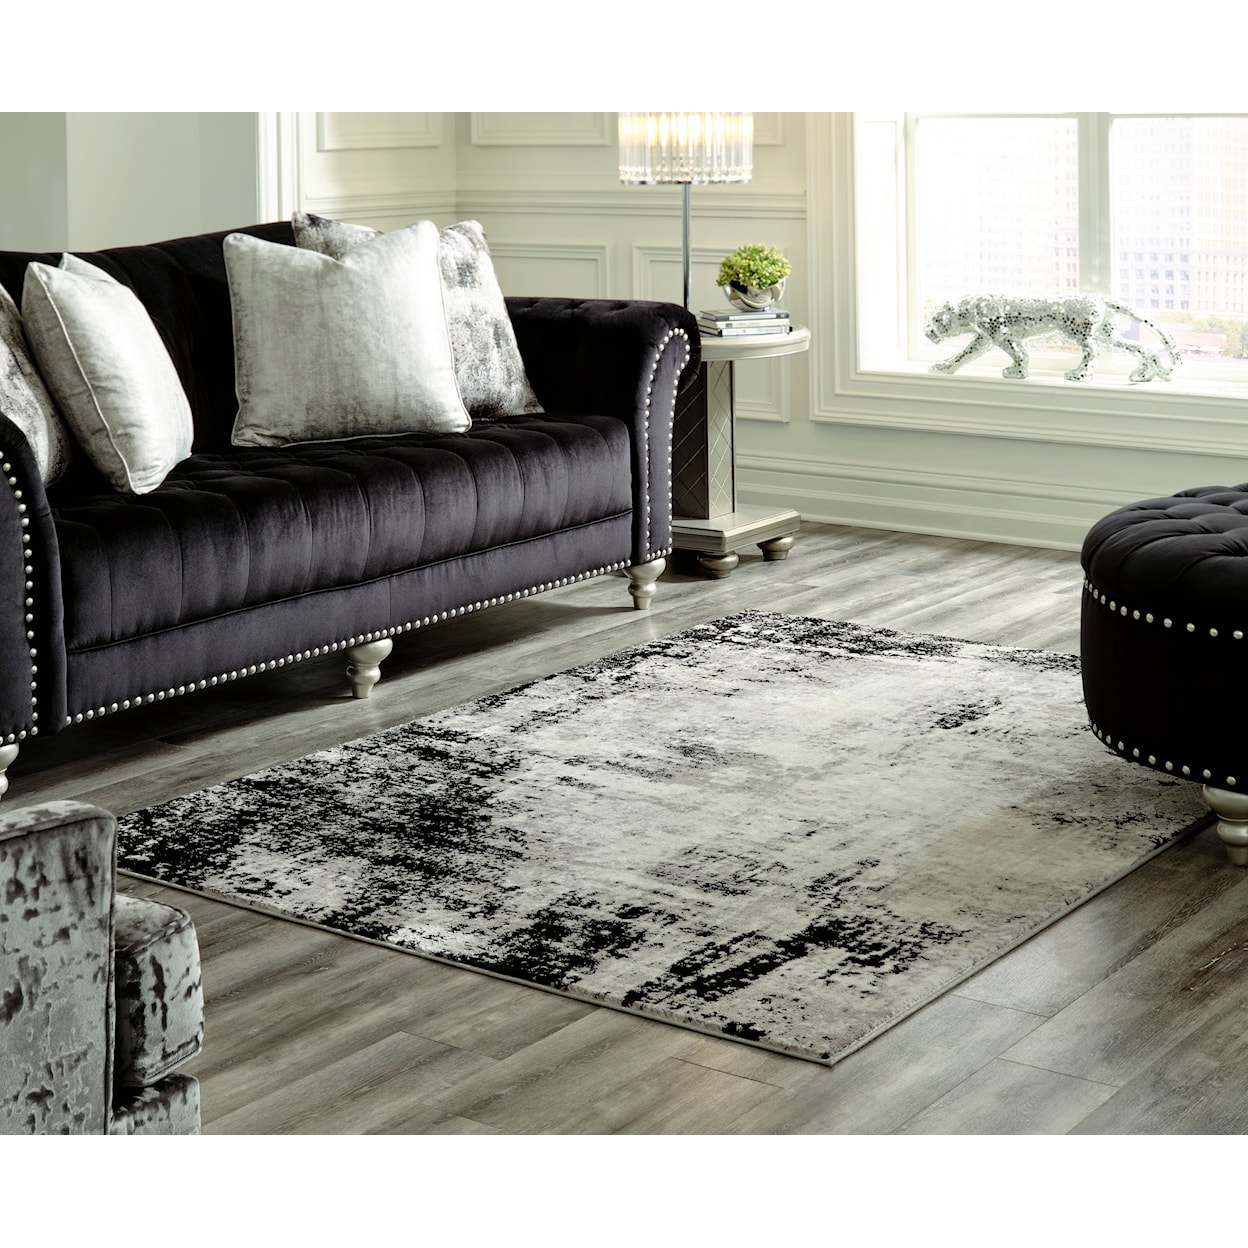 Ashley Furniture Signature Design Contemporary Area Rugs Zekeman 5'3" x 7'7" Rug